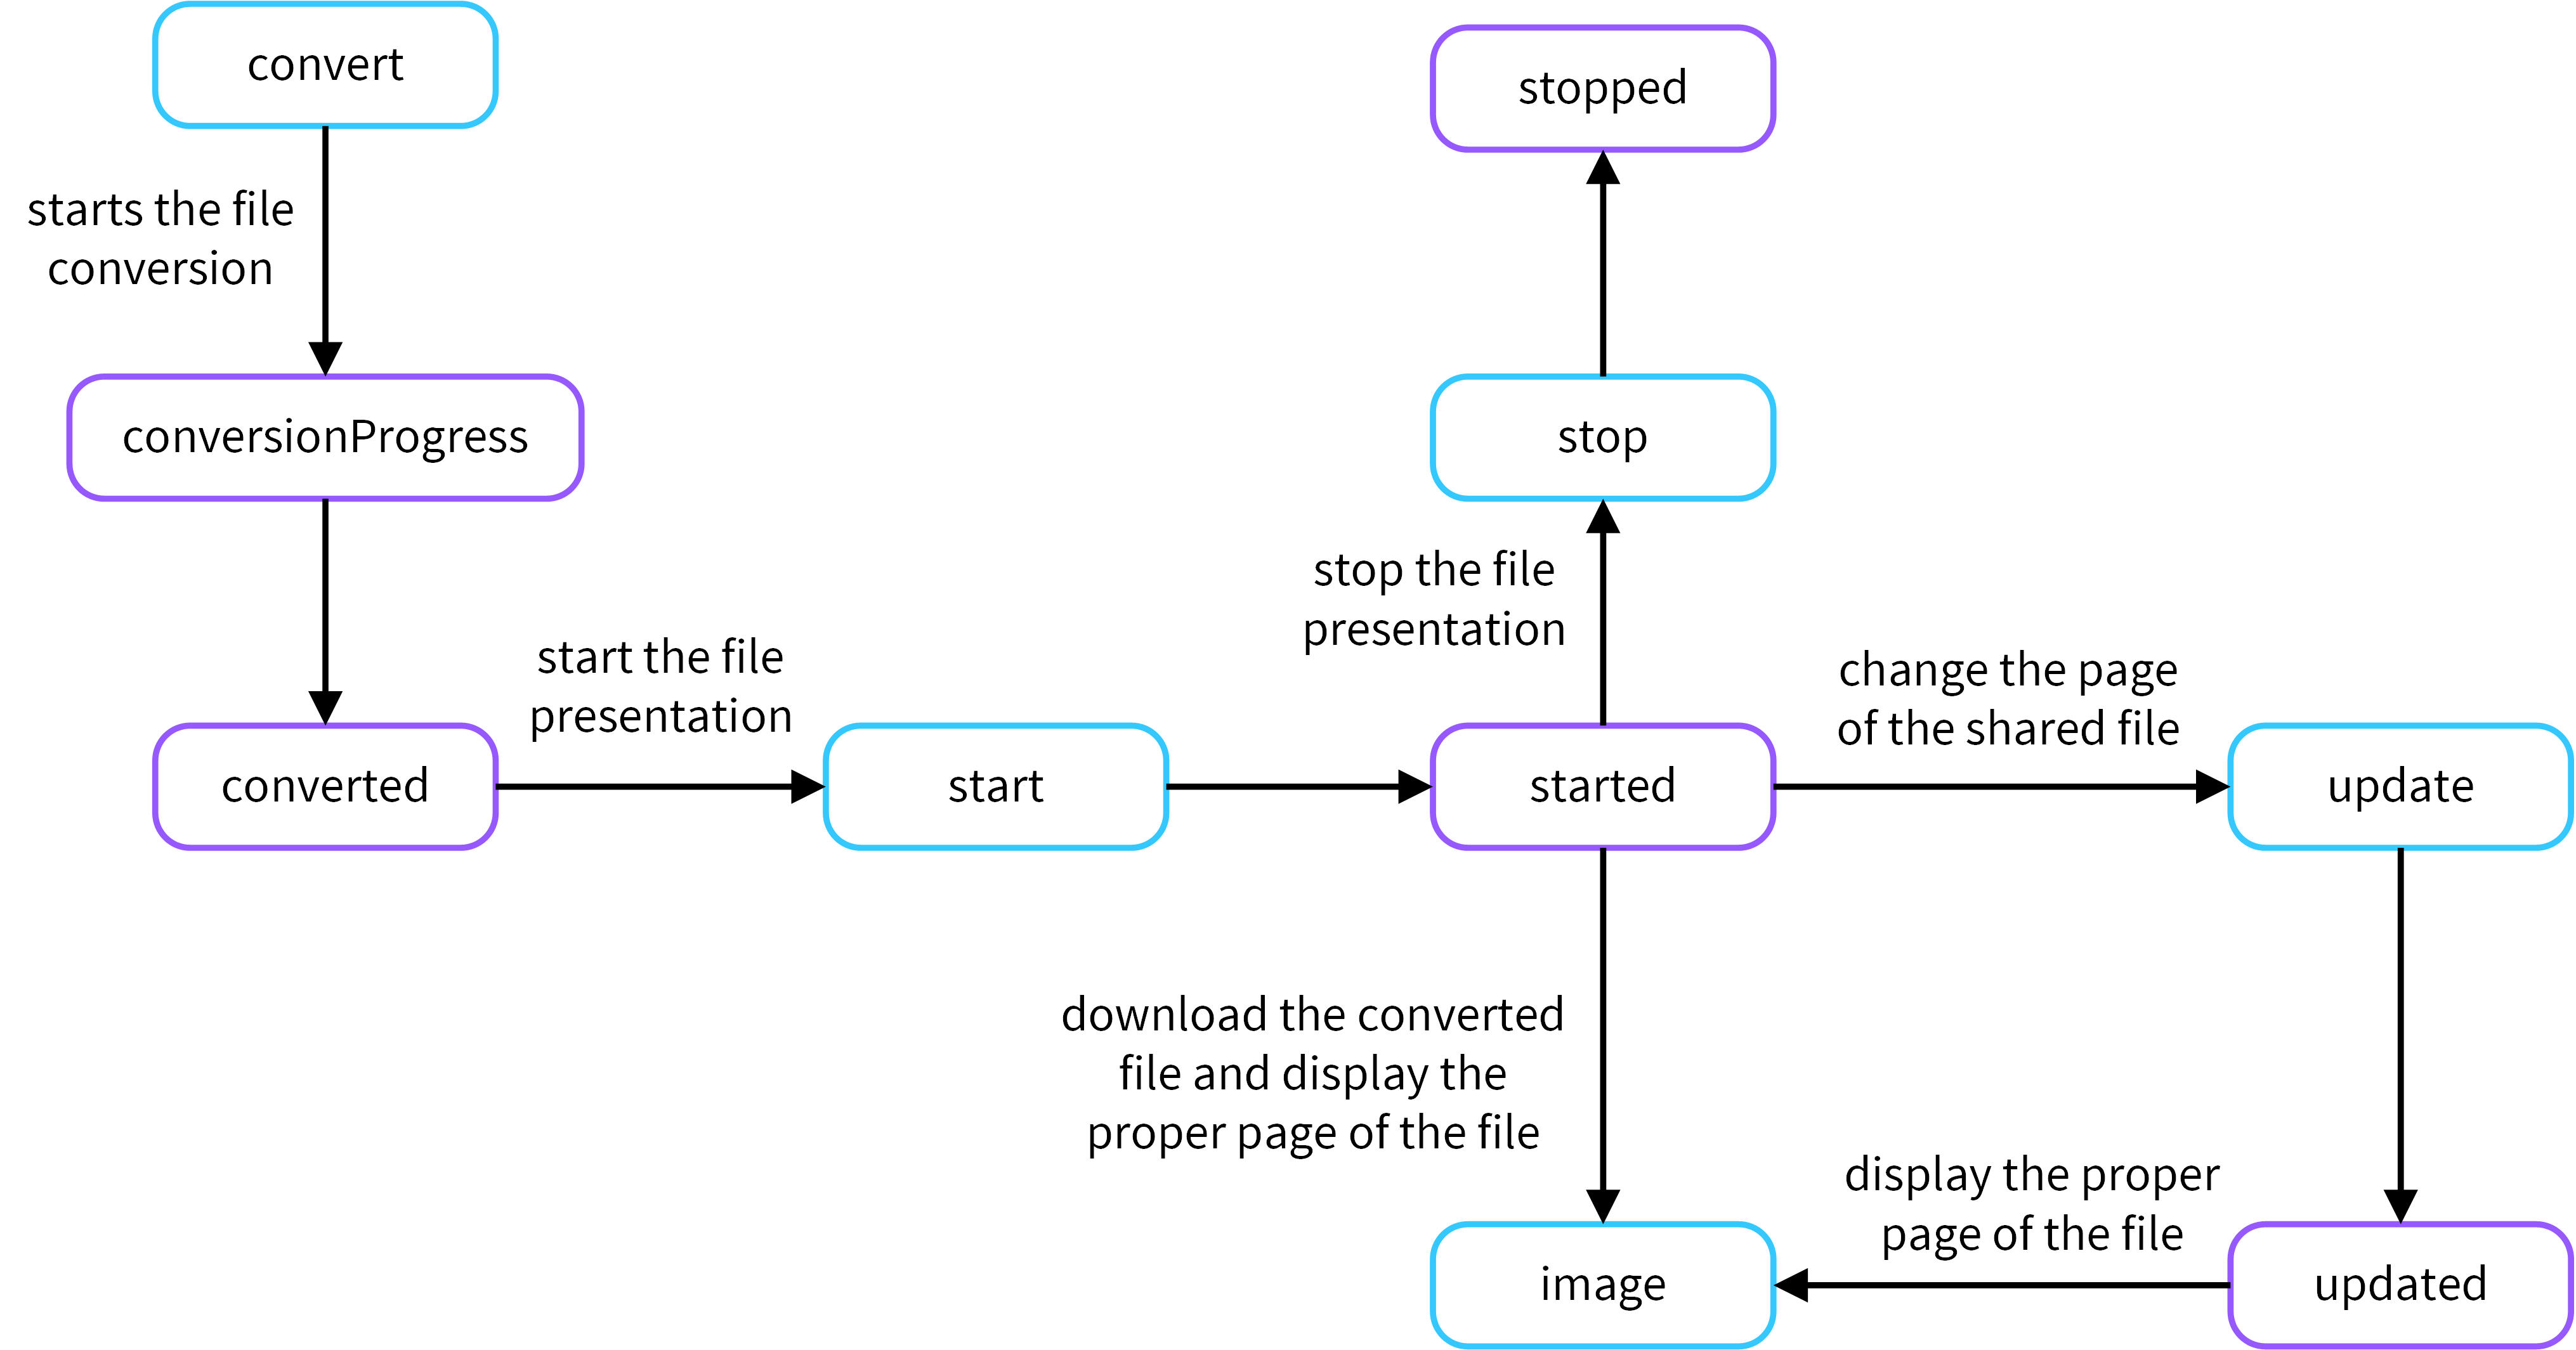 The file presentation diagram